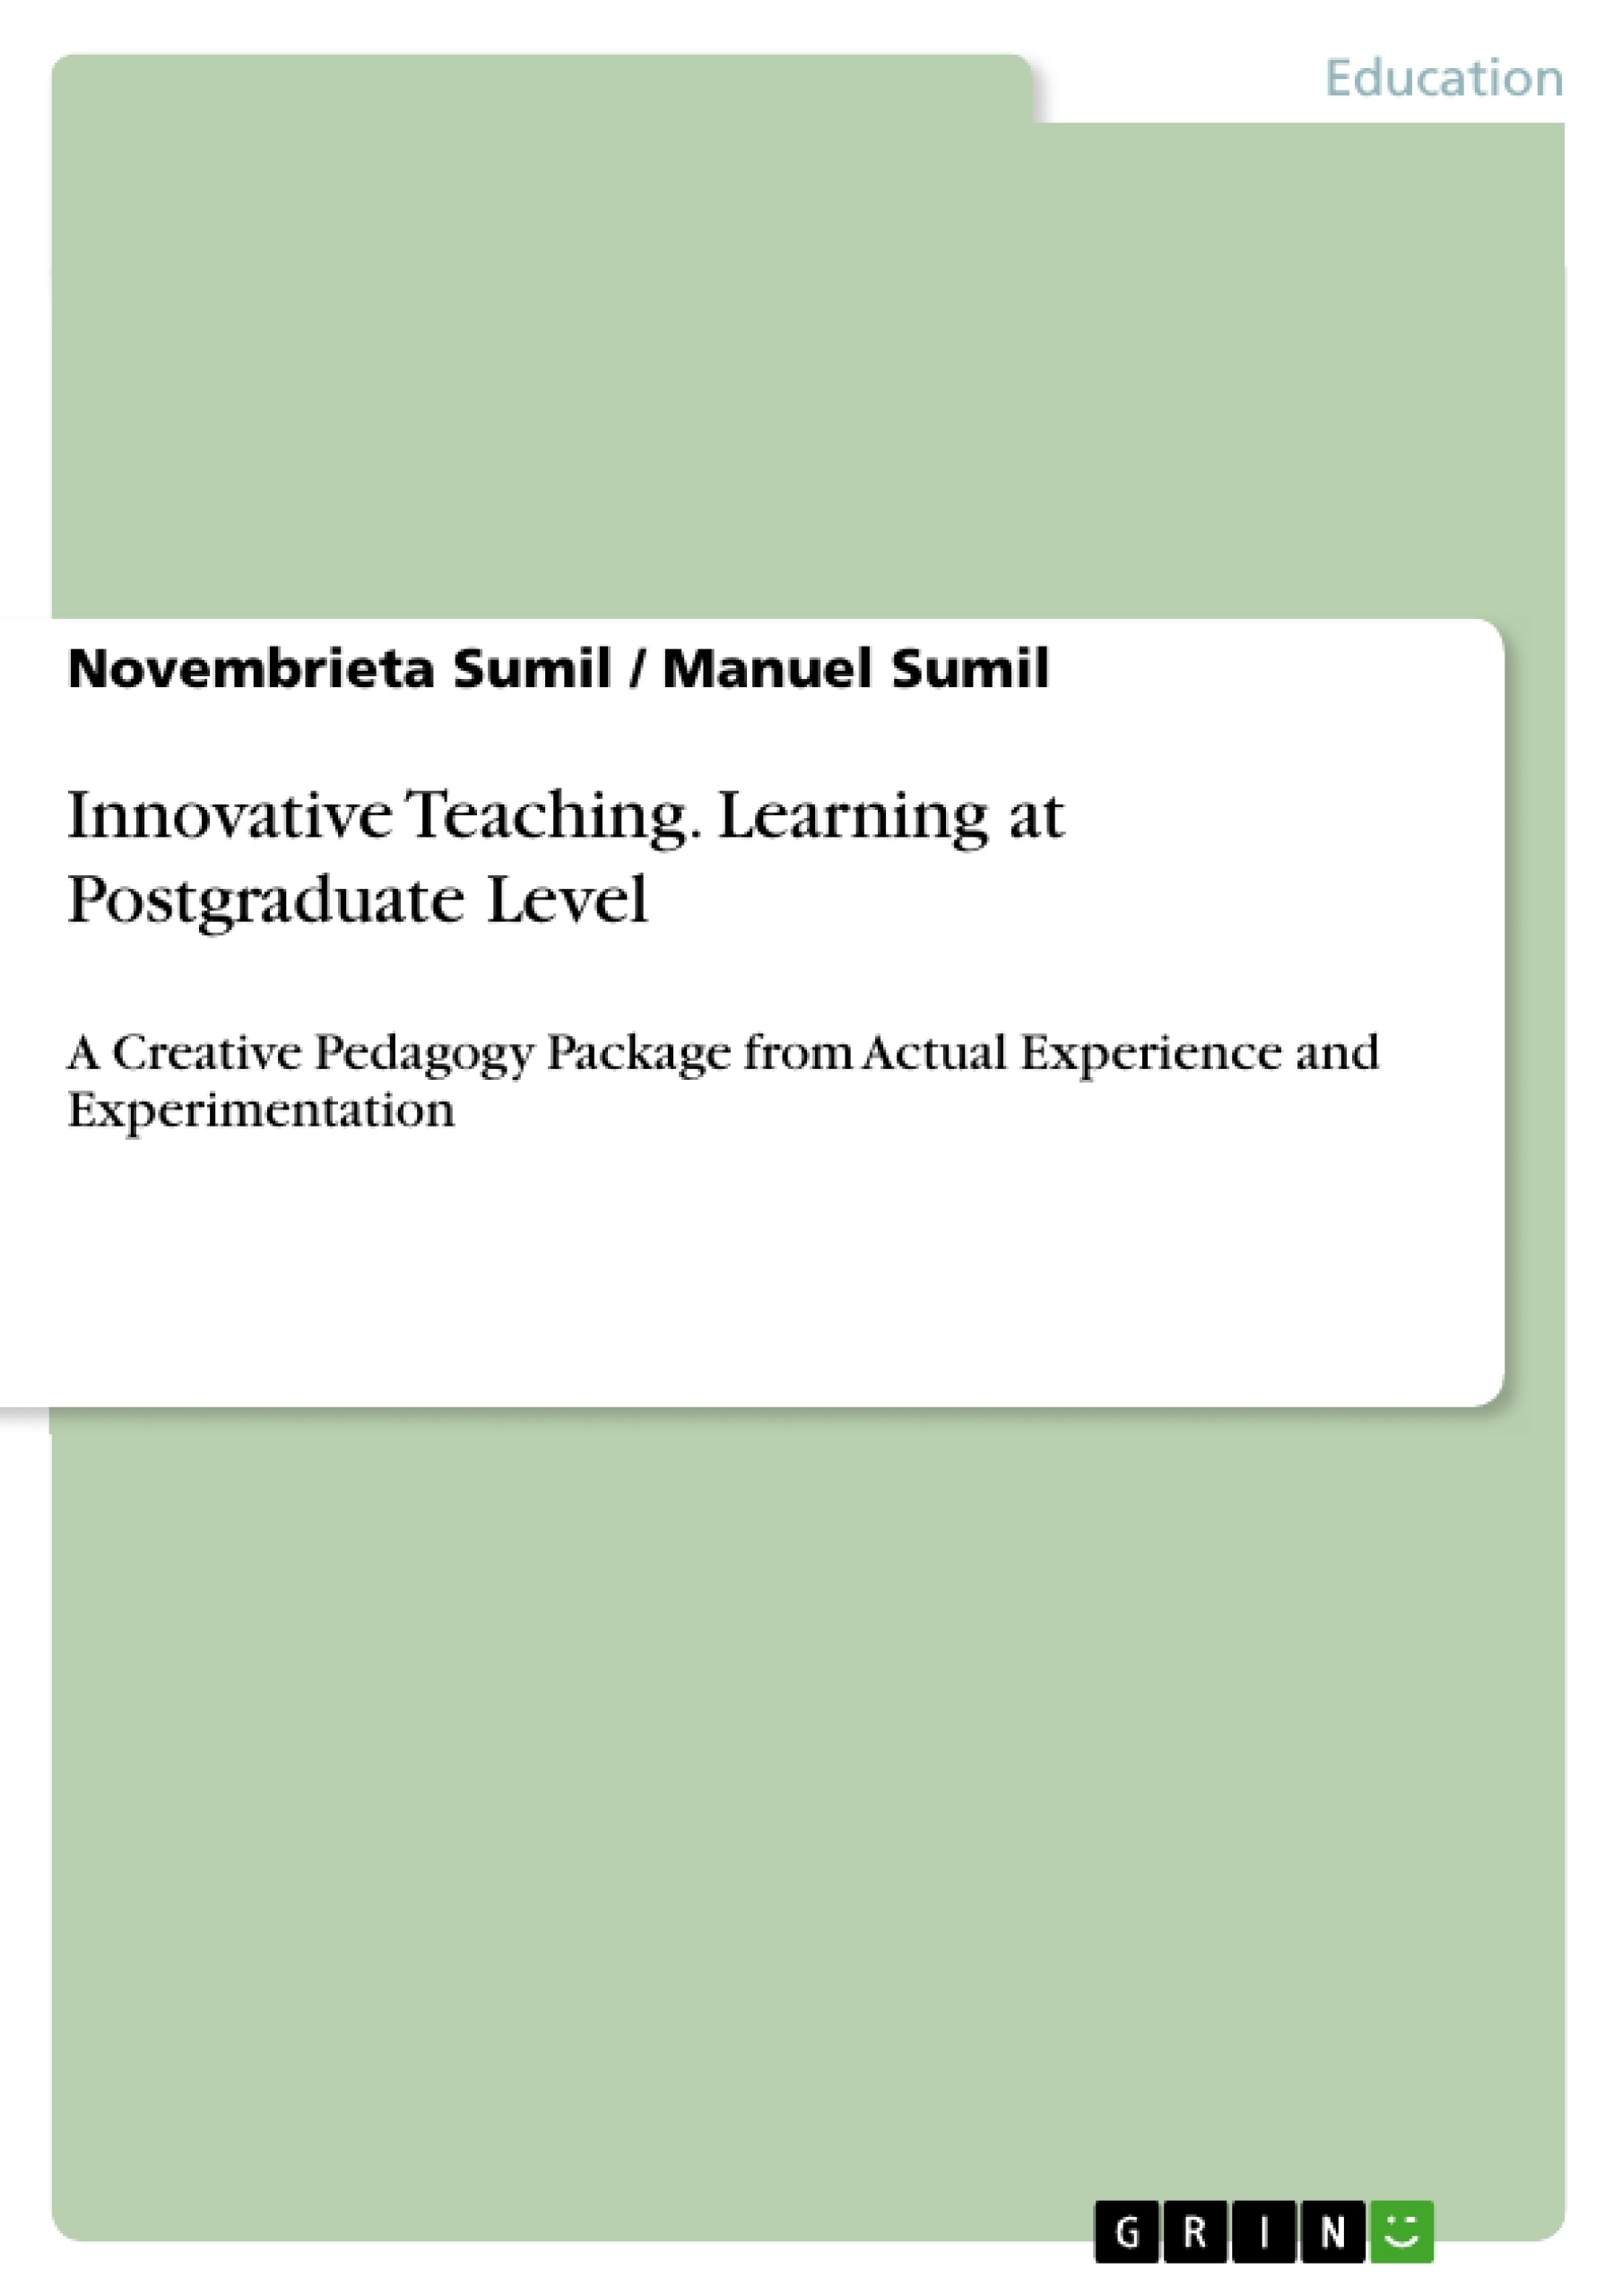 Título: Innovative Teaching. Learning at Postgraduate Level